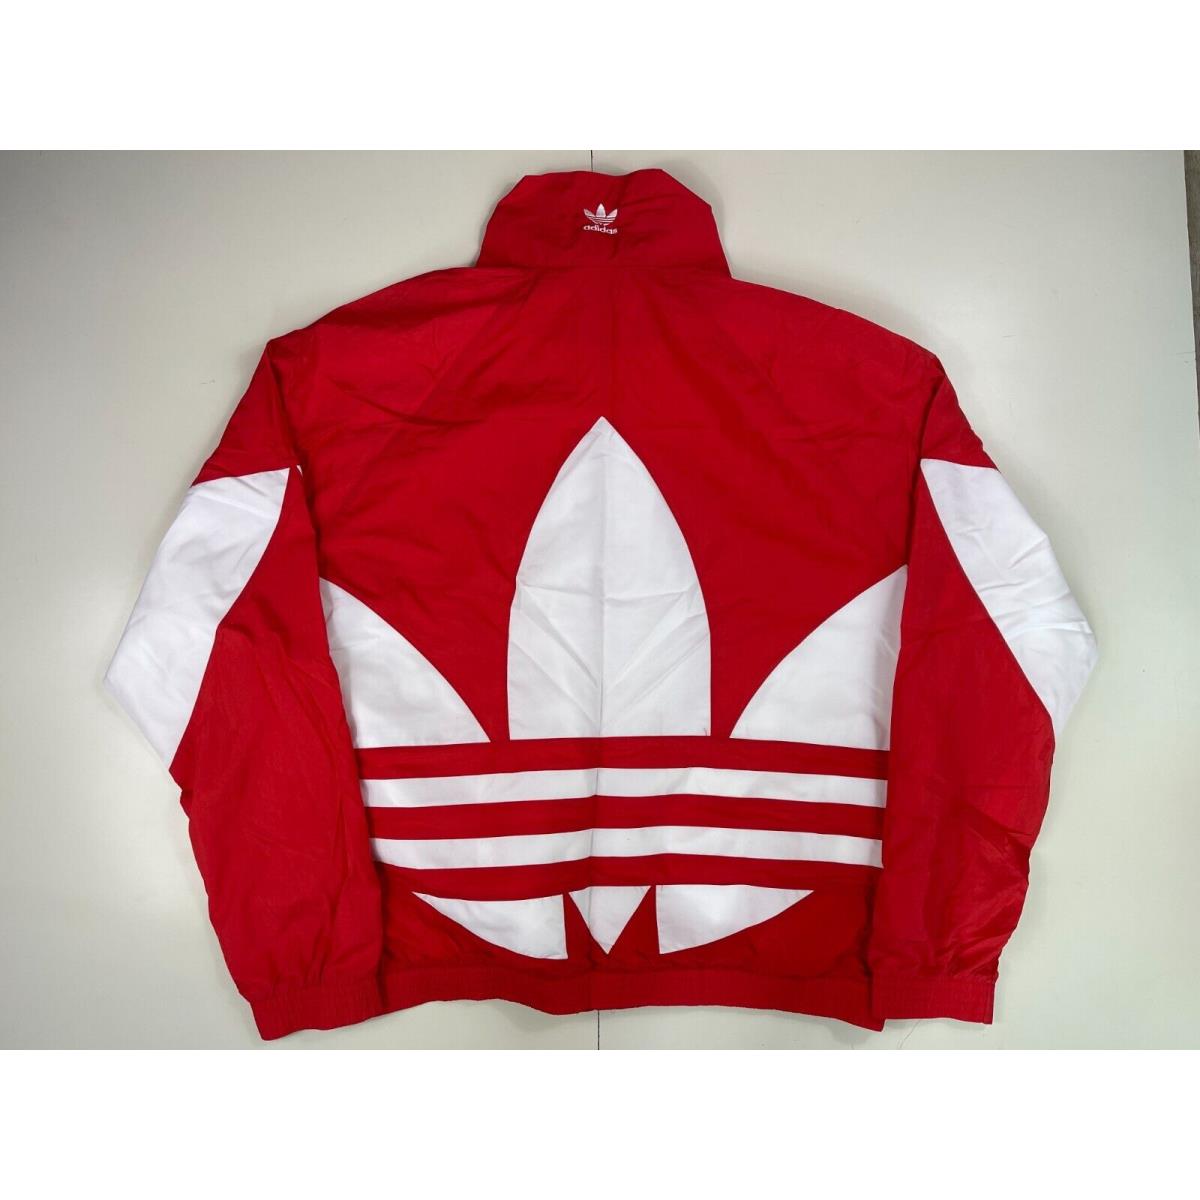 Adidas Originals Big Trefoil Track Jacket Red White Size XL FM9891